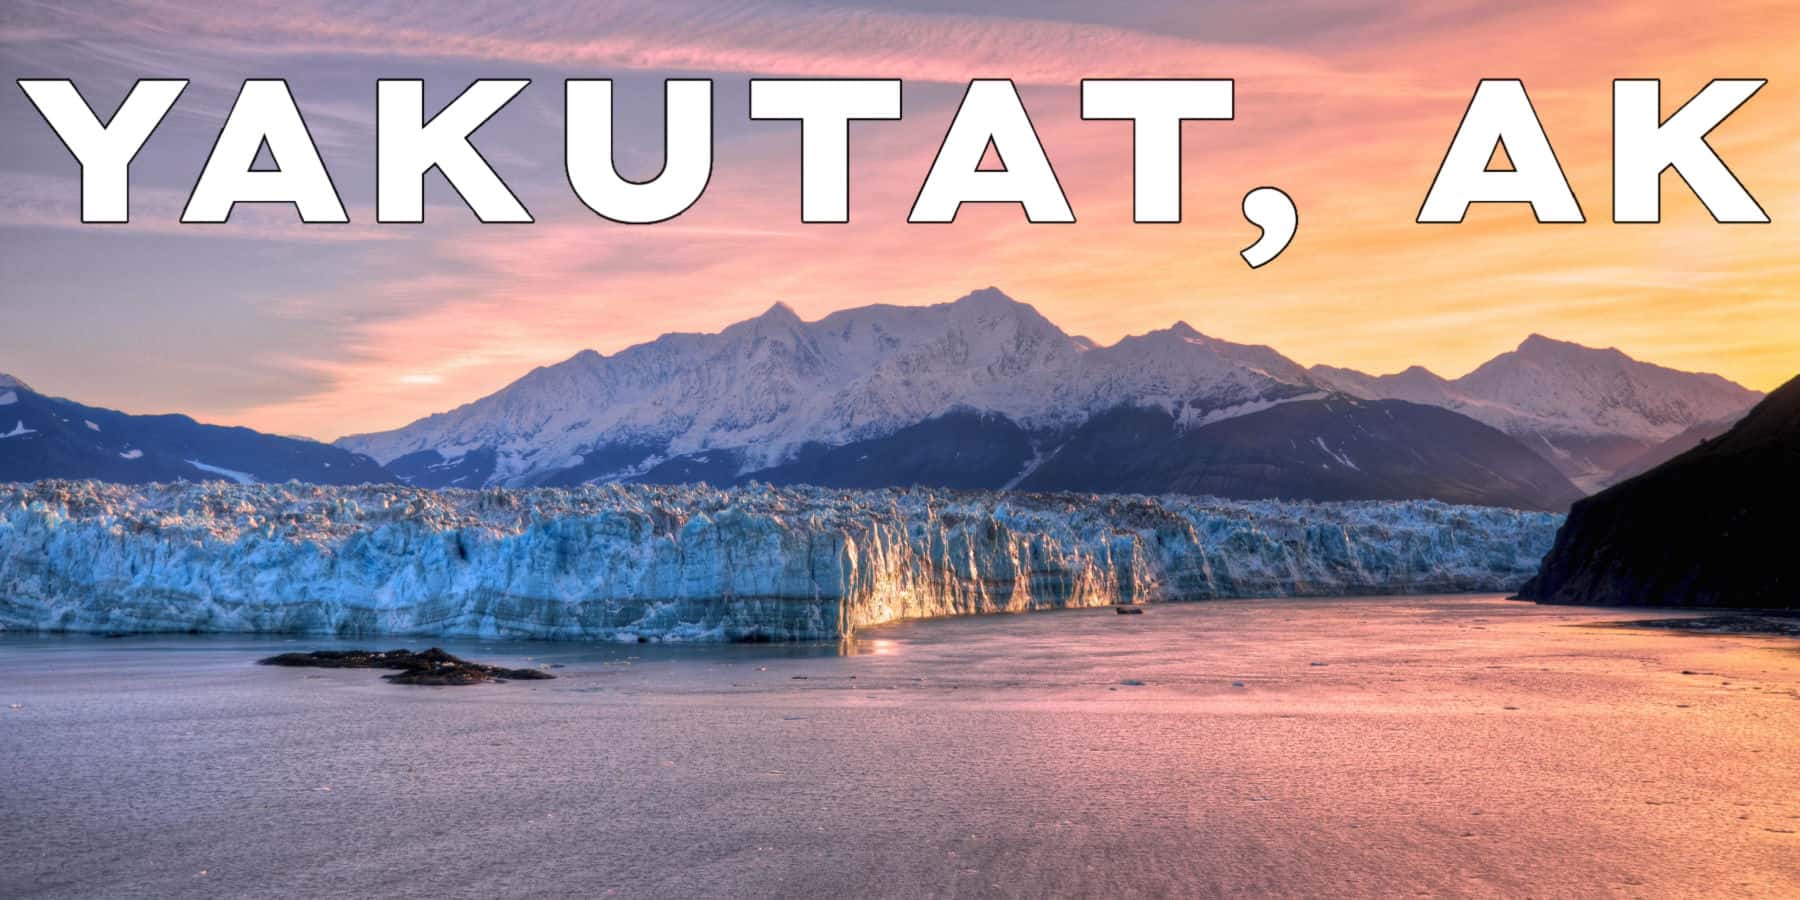 Yakutat, Alaska - Cities & Towns Of The Pacific Northwest